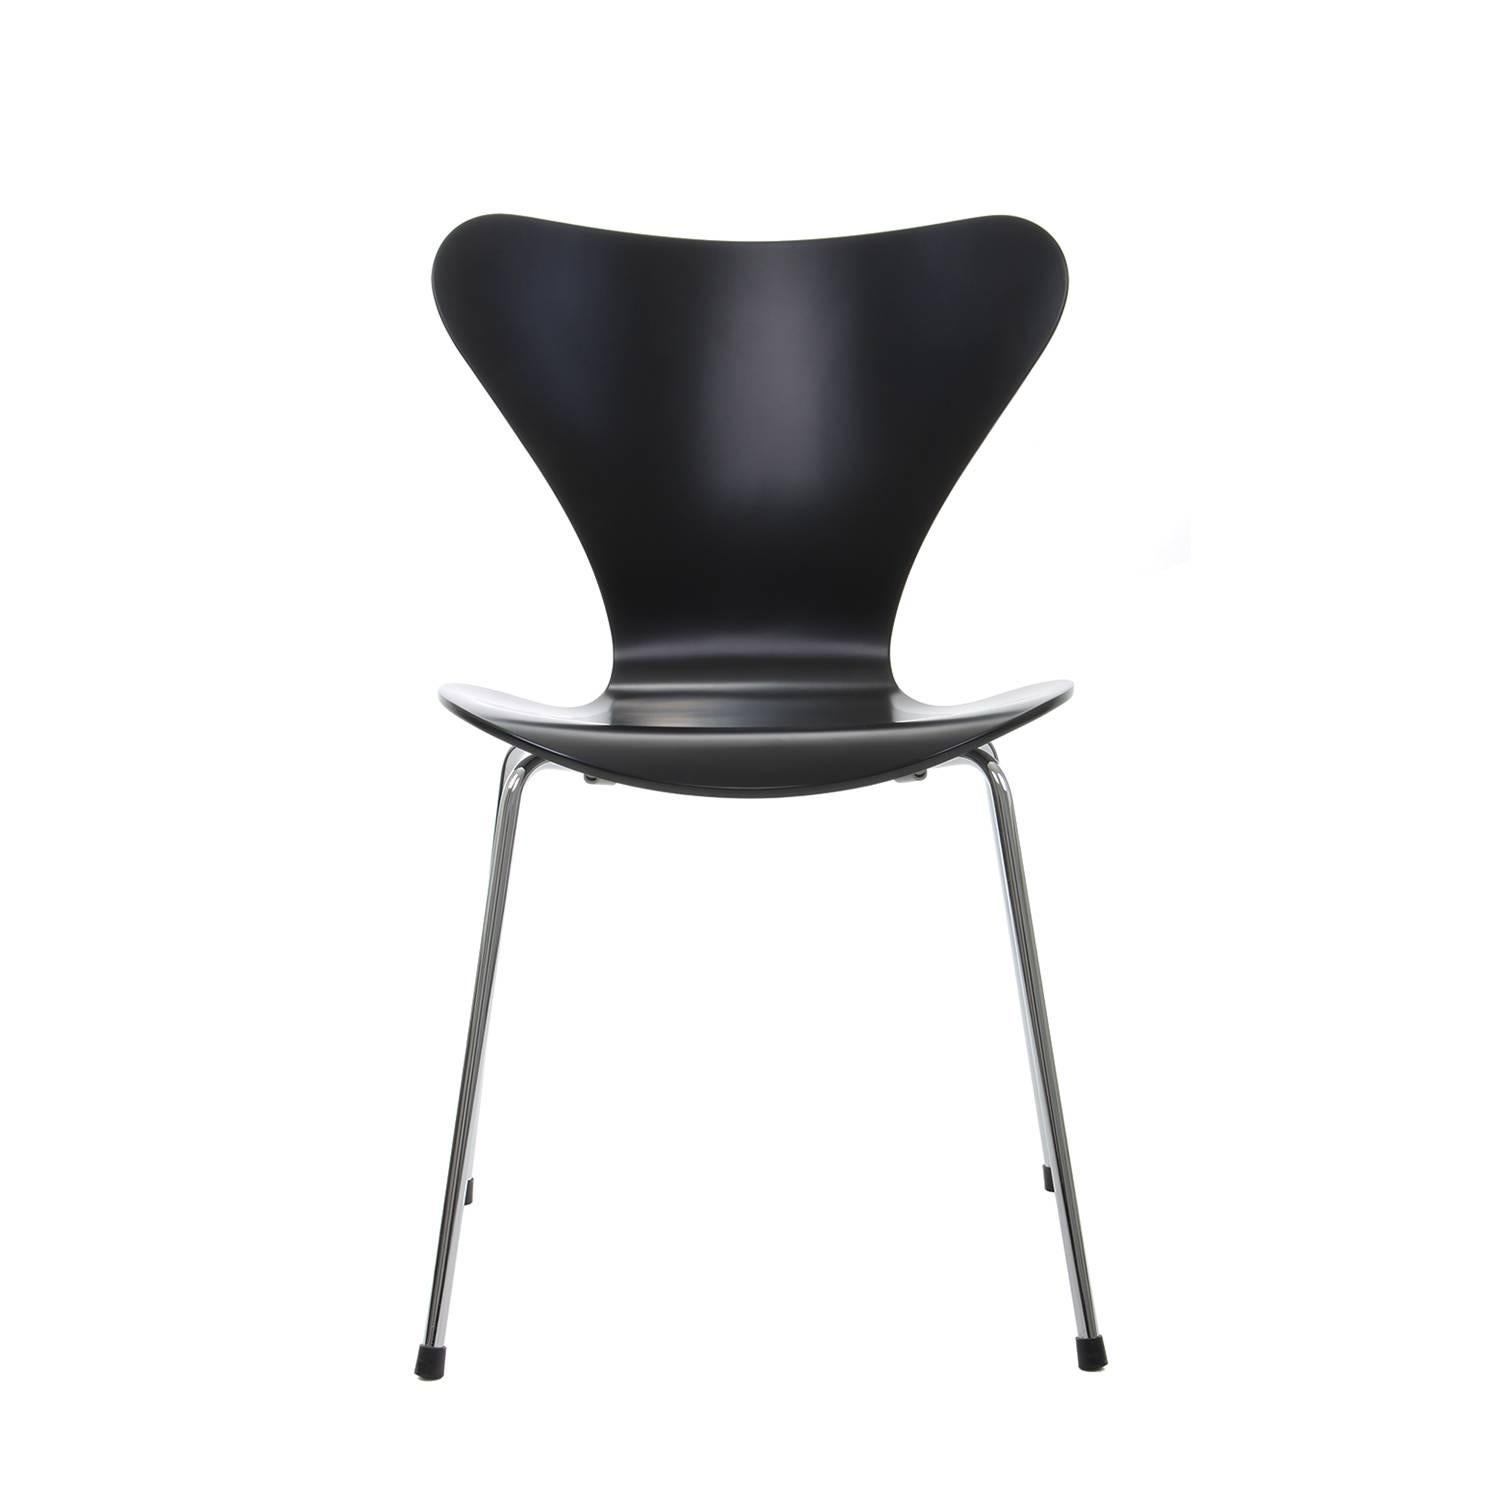 Series 7 Chair by Arne Jacobsen, for Fritz Hansen 1955. Professionally Restored For Sale